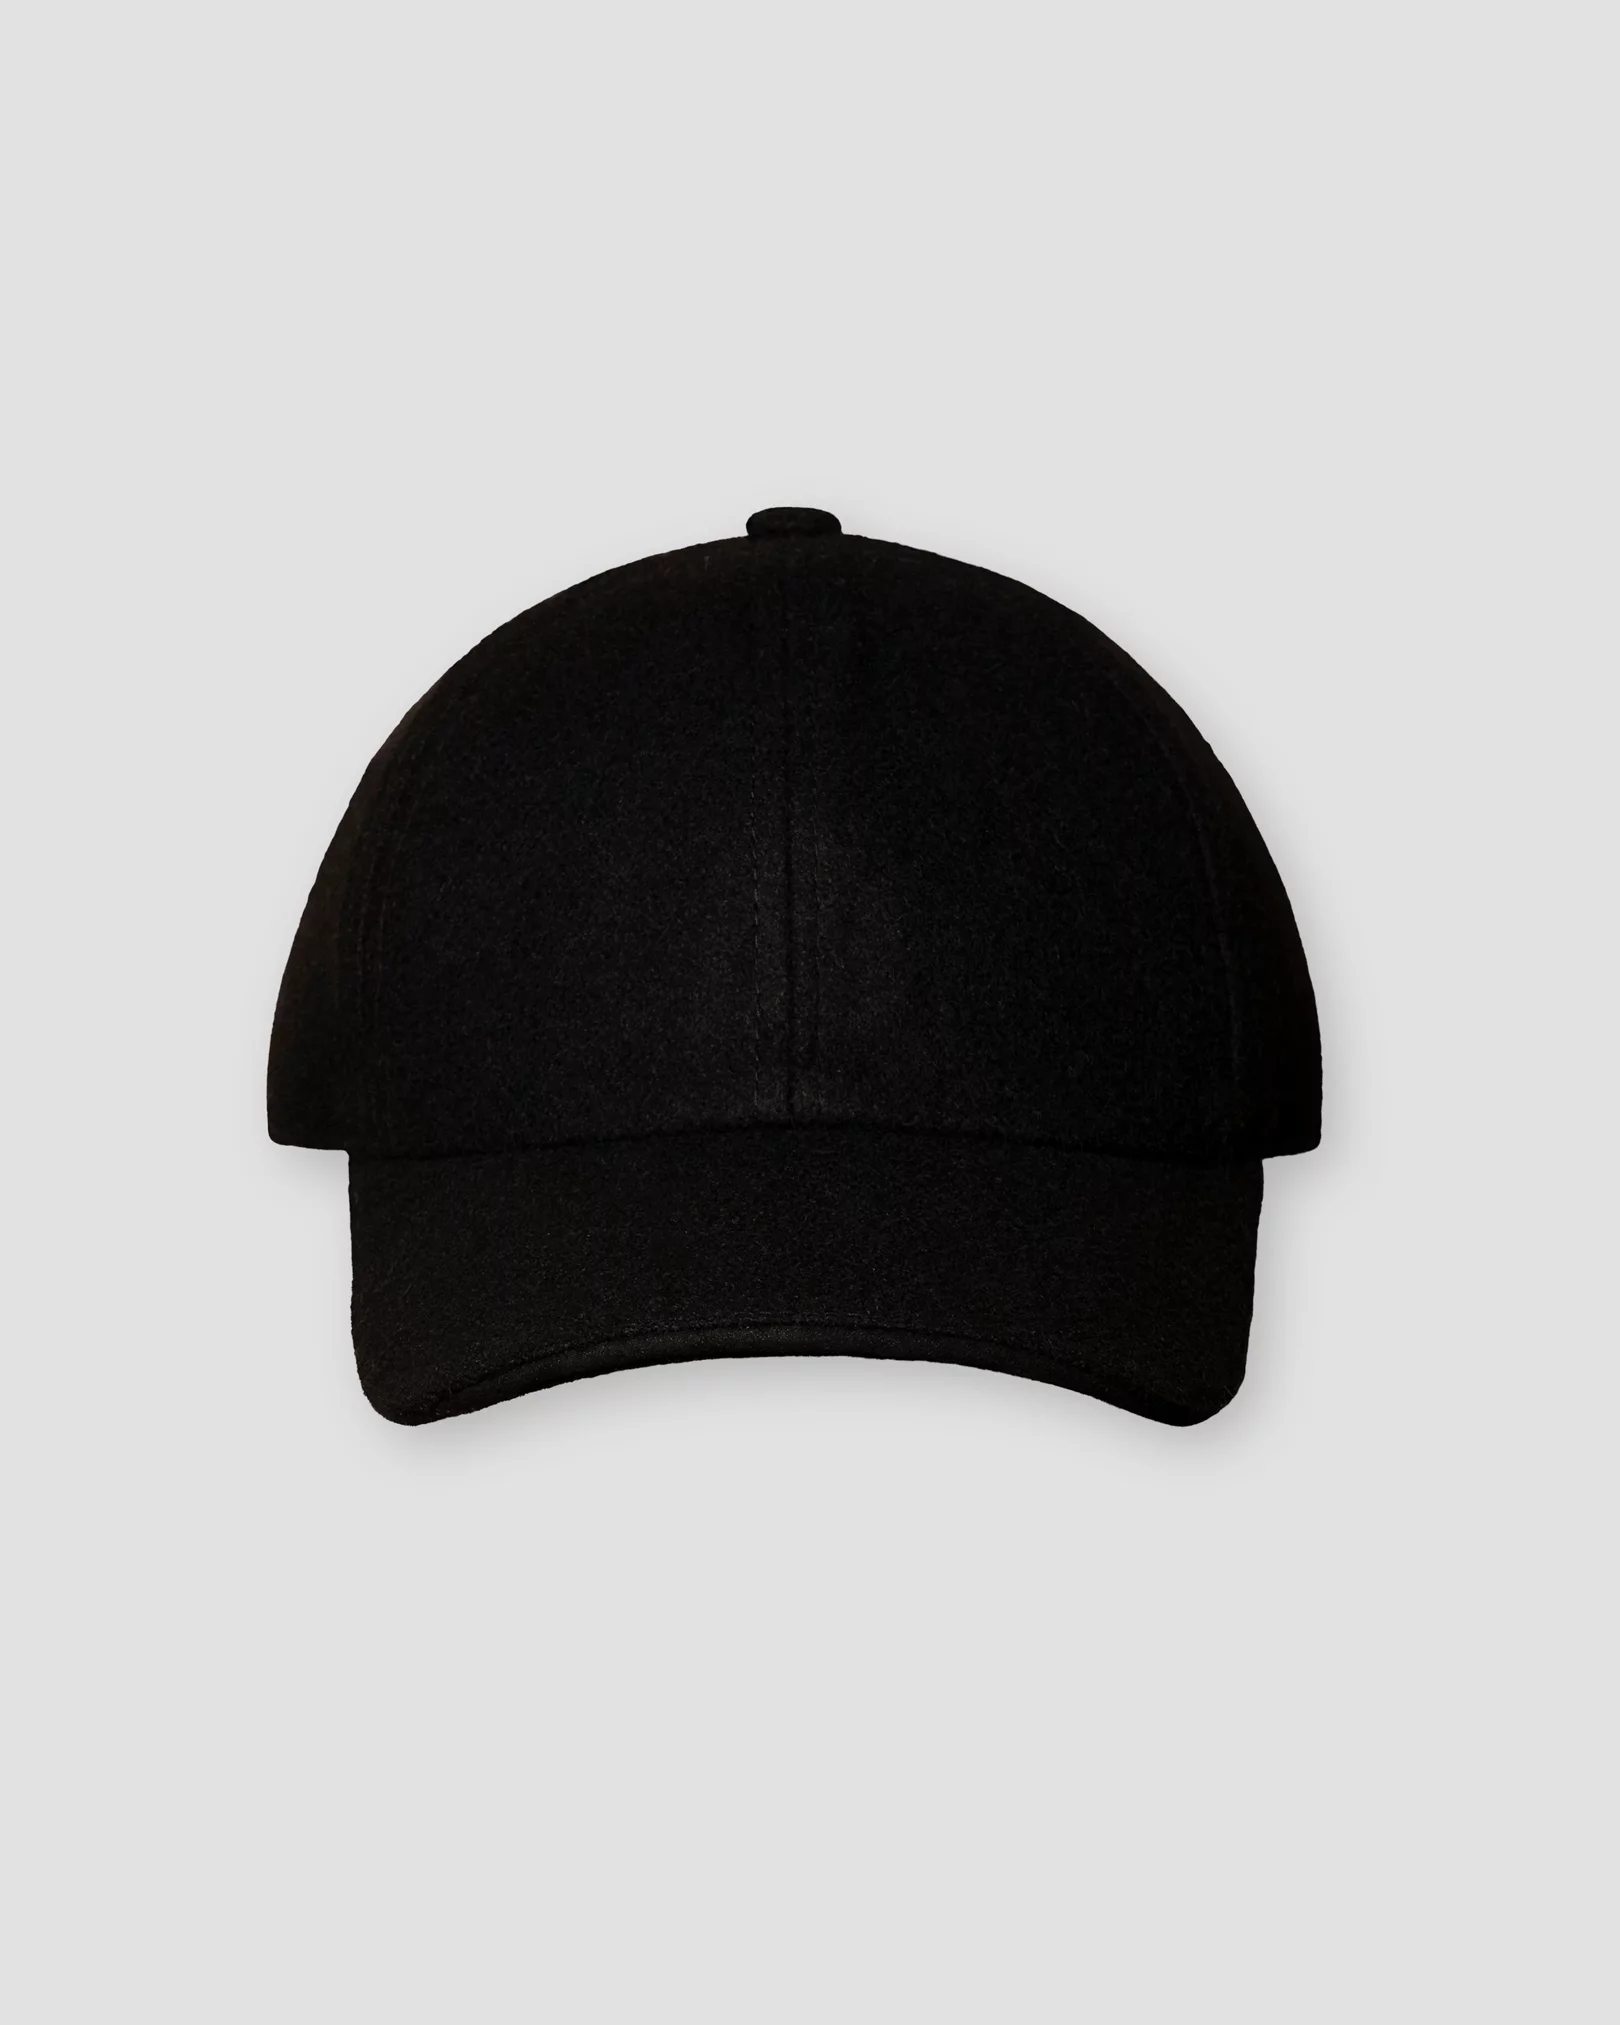 Eton - black cap